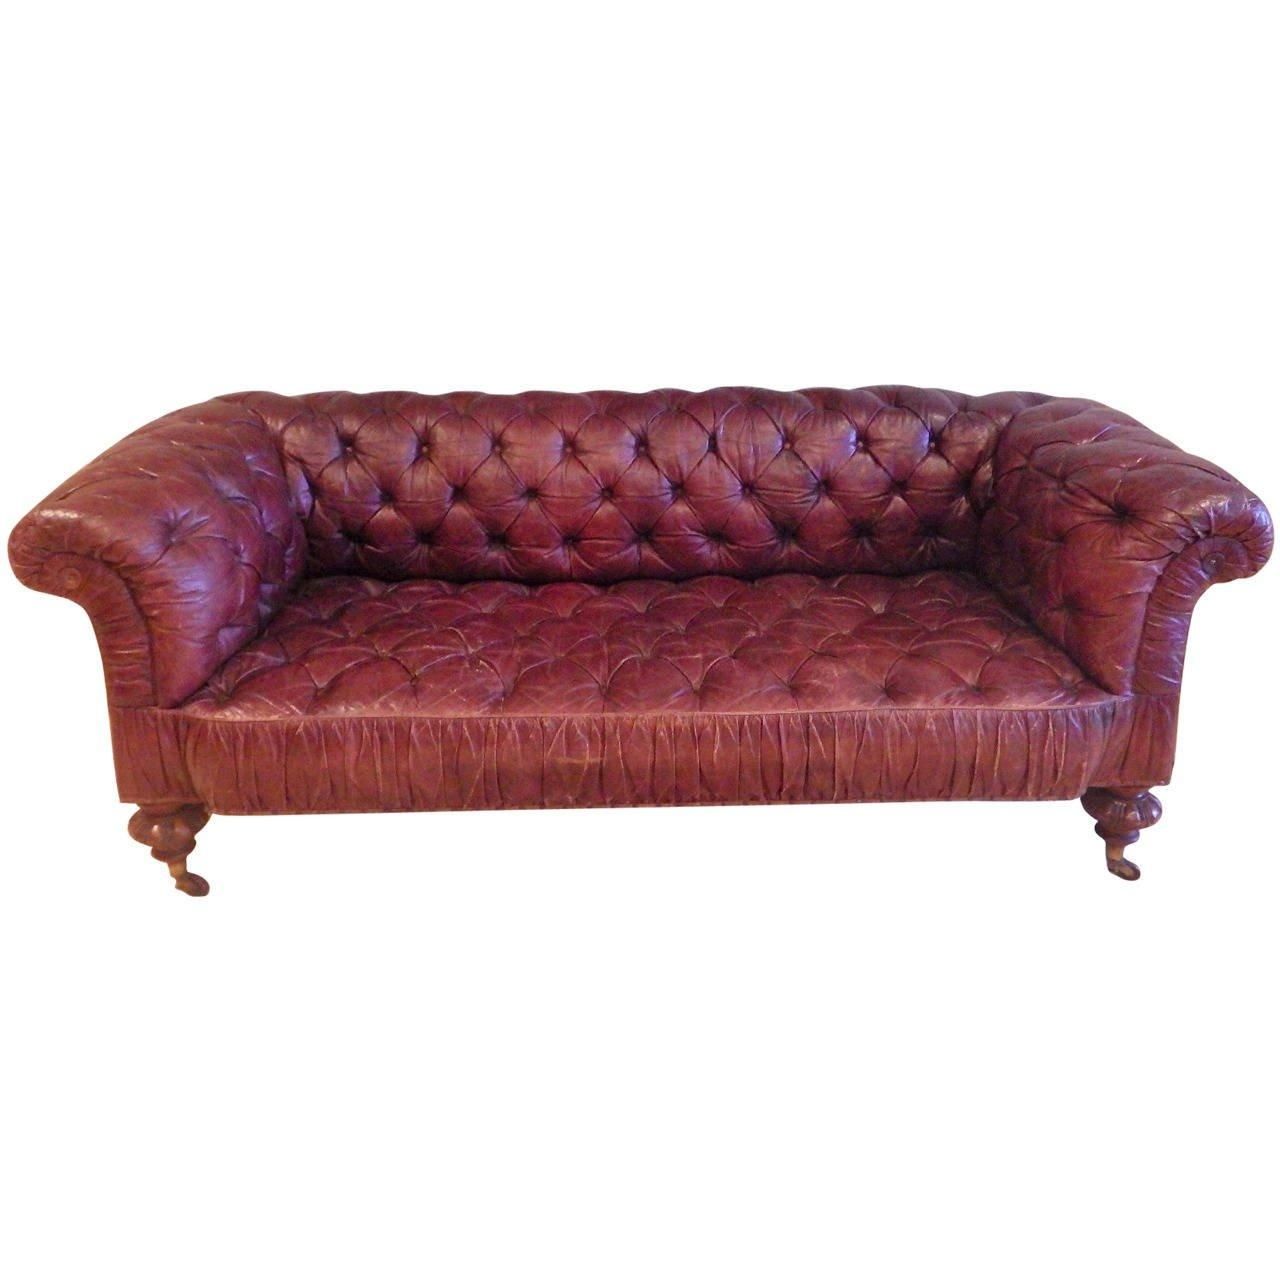 Superb Victorian Leather Sofa, Circa 1870 For Sale At 1Stdibs Within Victorian Leather Sofas (View 4 of 20)